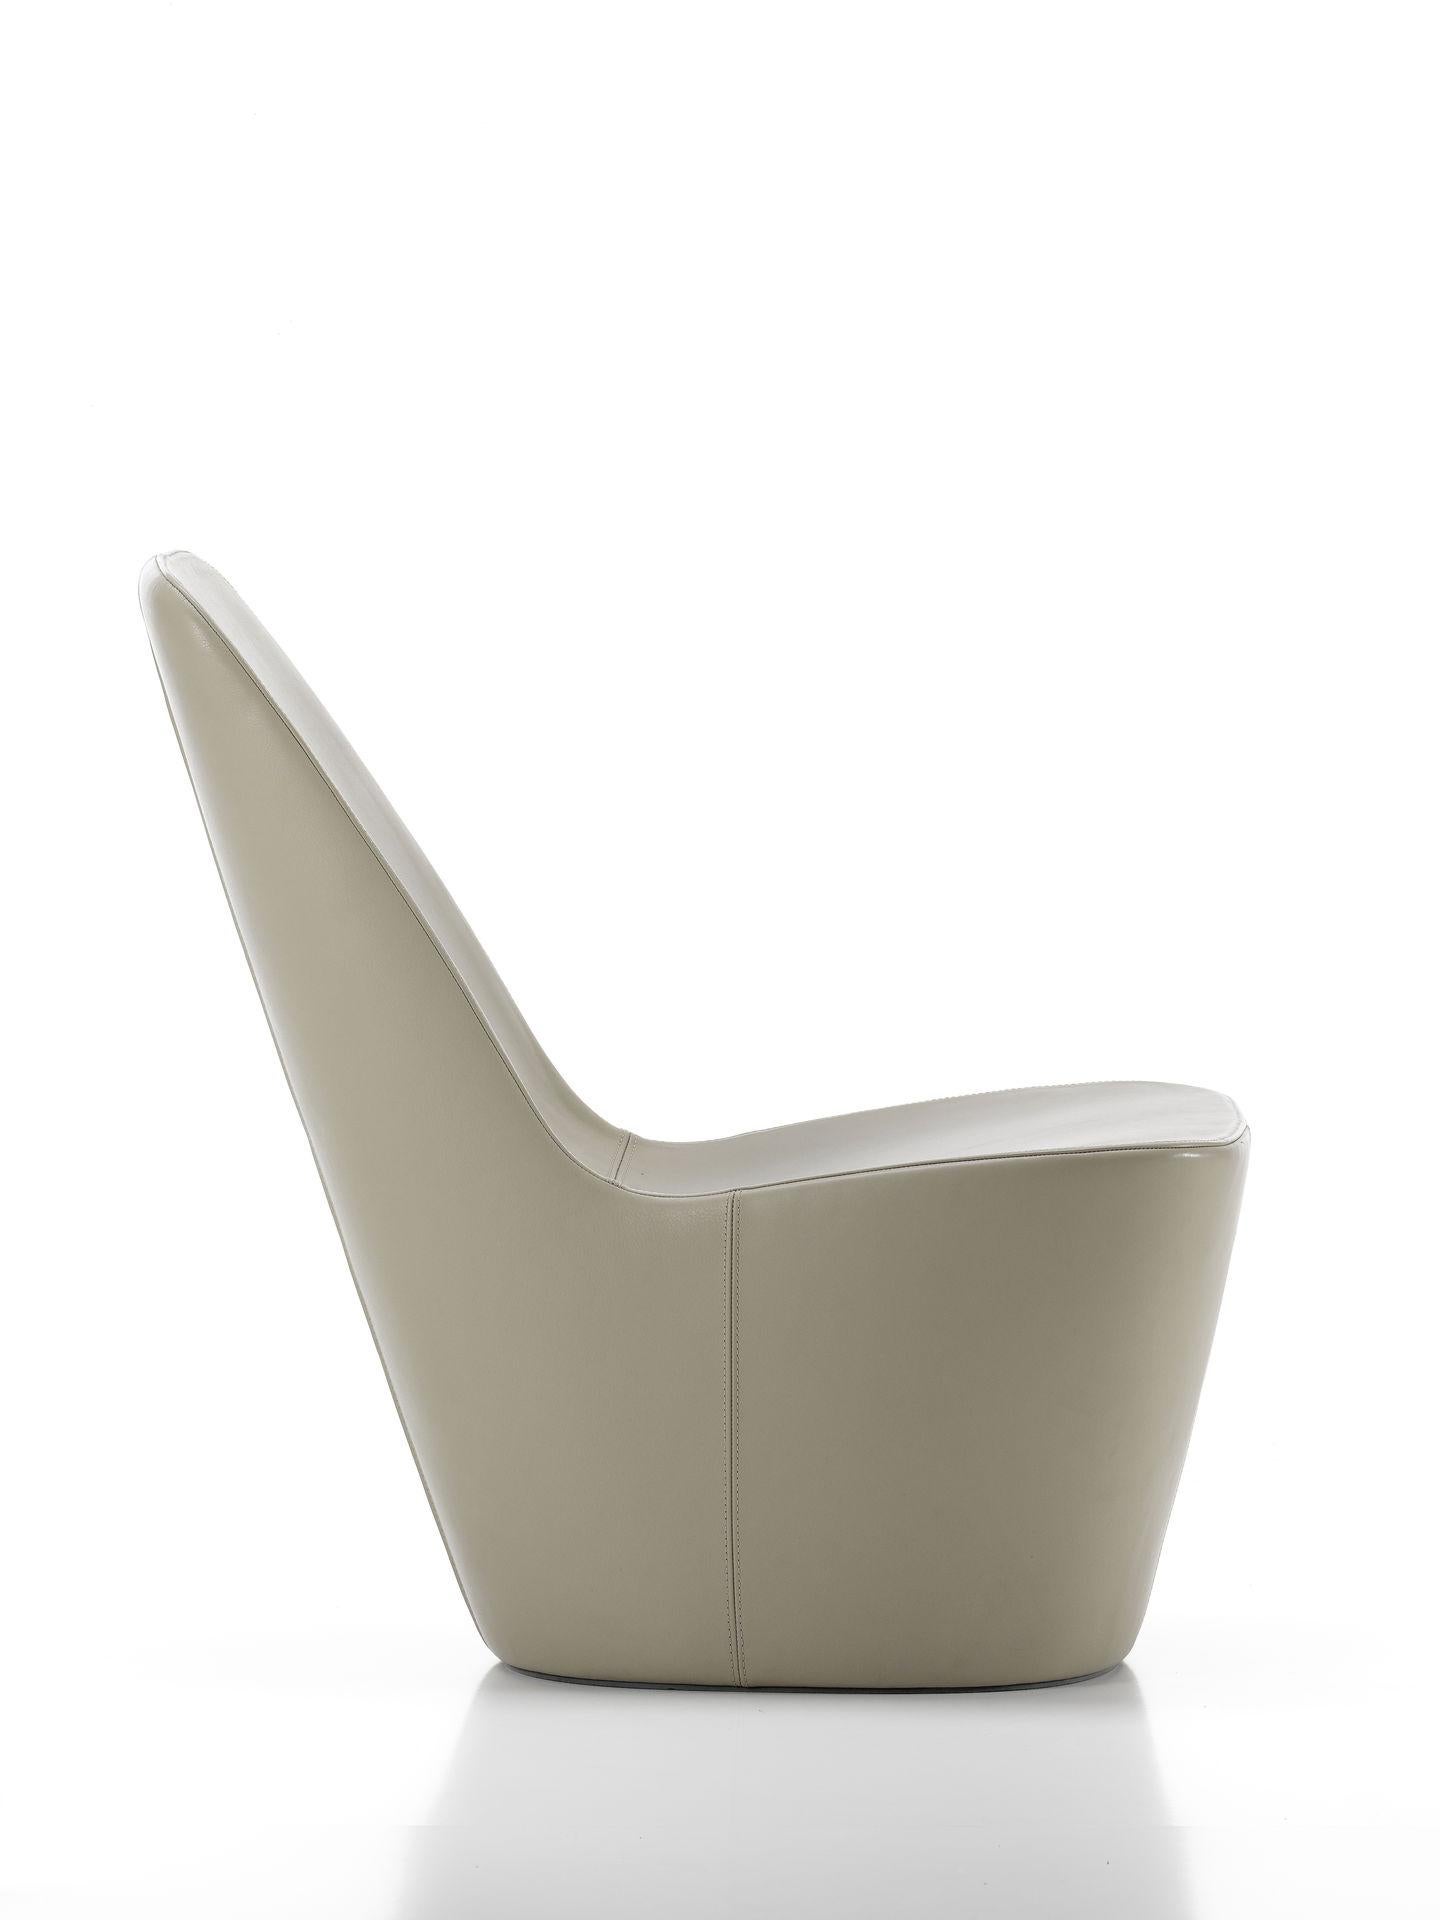 Swiss Jasper Morrison Monopod Sculptural Leather Chair by Vitra